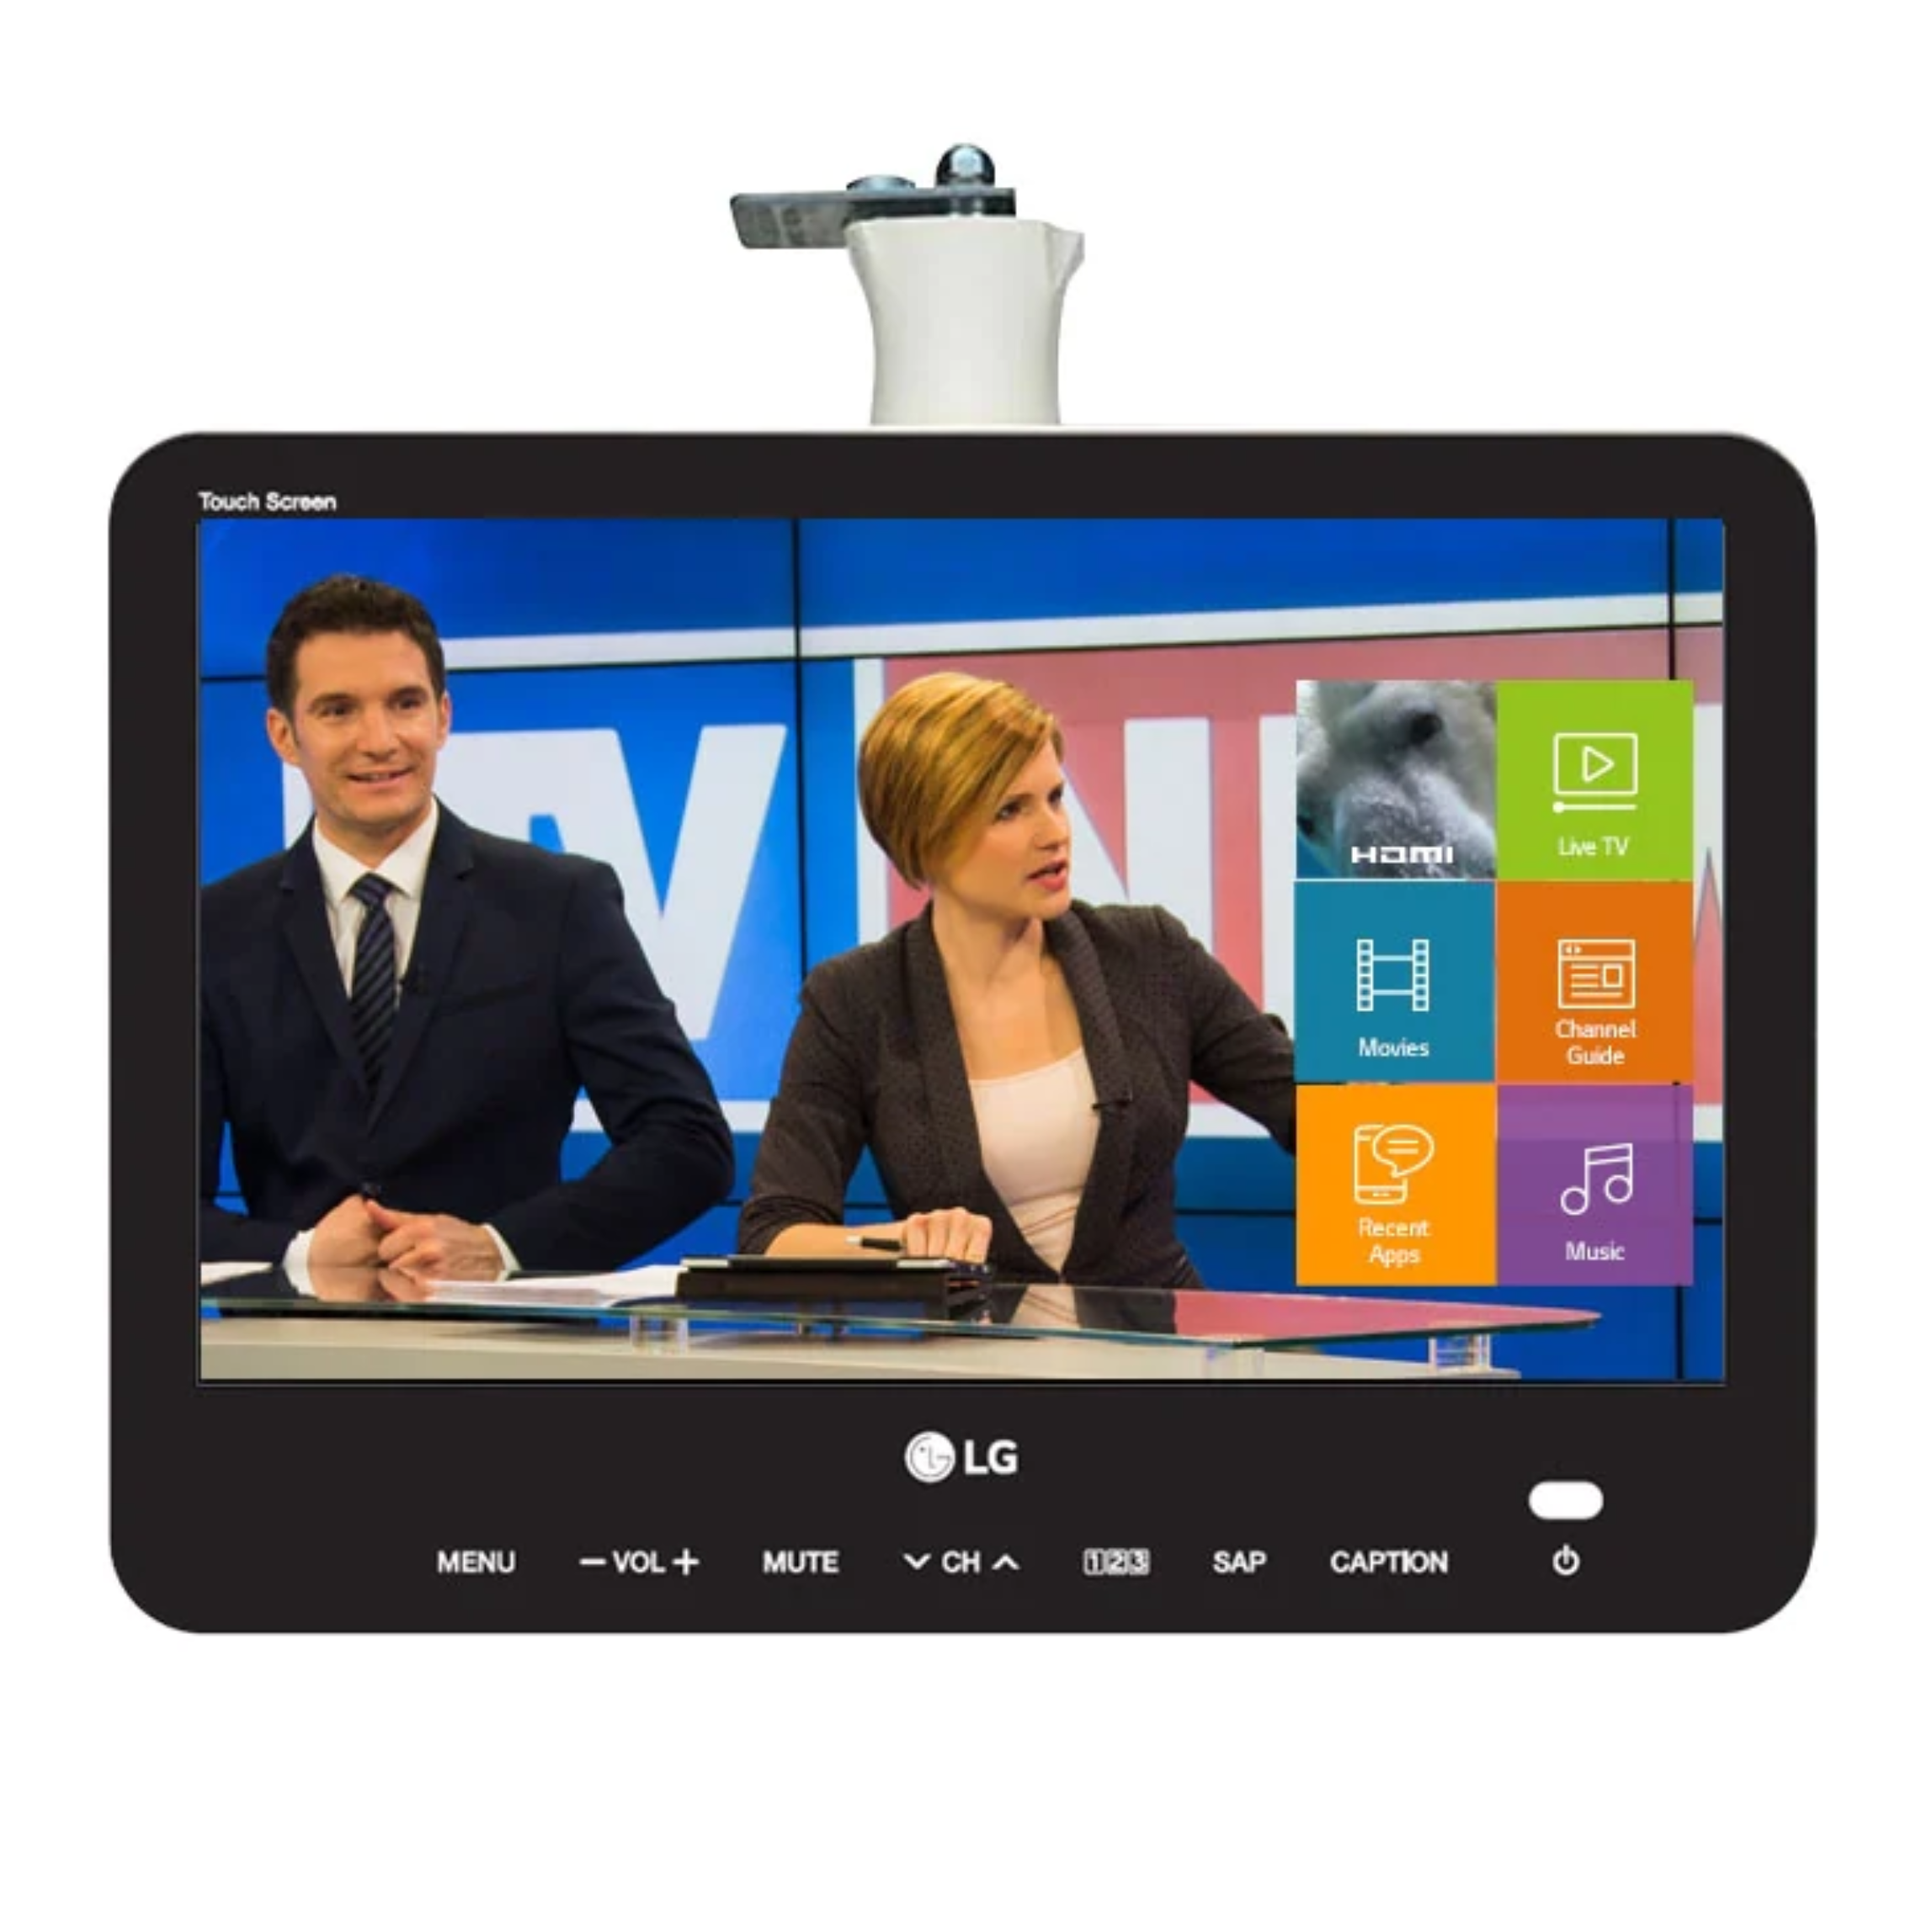 4K UHD TV - Interactive LG Touchscreen in Hospital Setting"